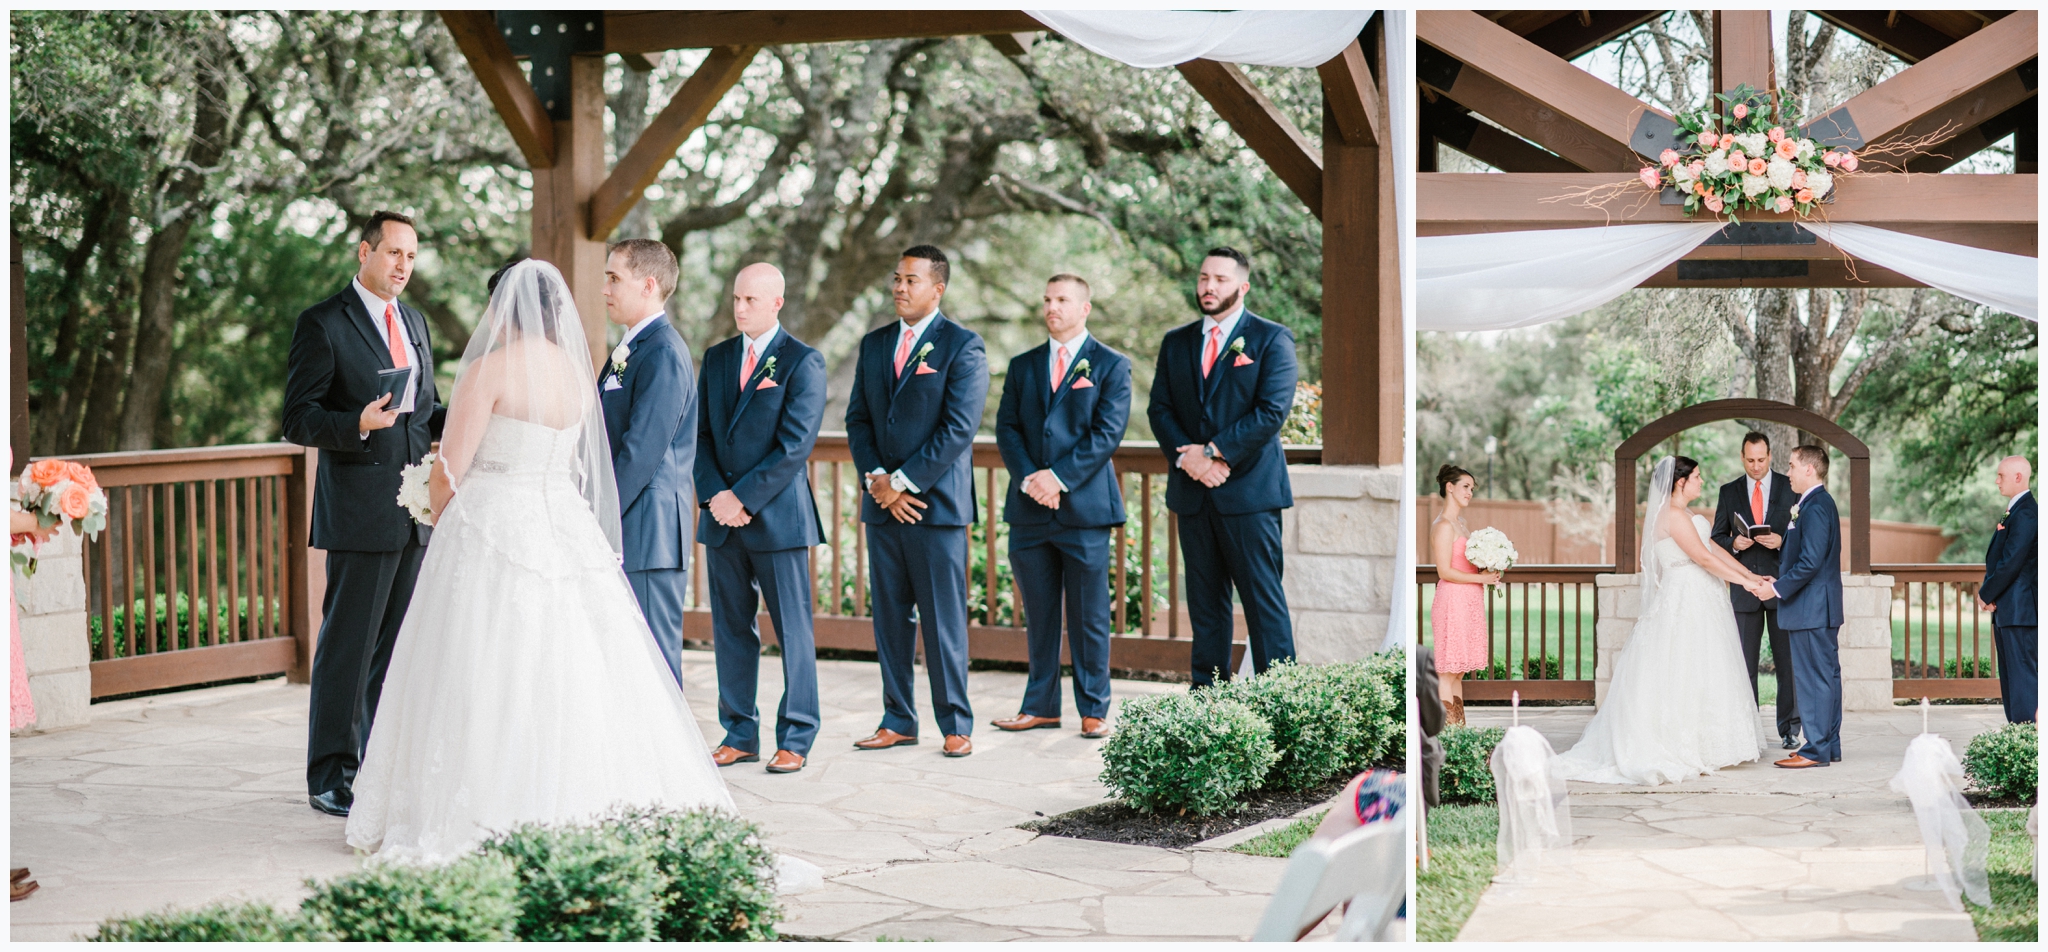 joslyn-holtfort-photography-austin-texas-wedding-the-union-on-eighth-georgetown_0022